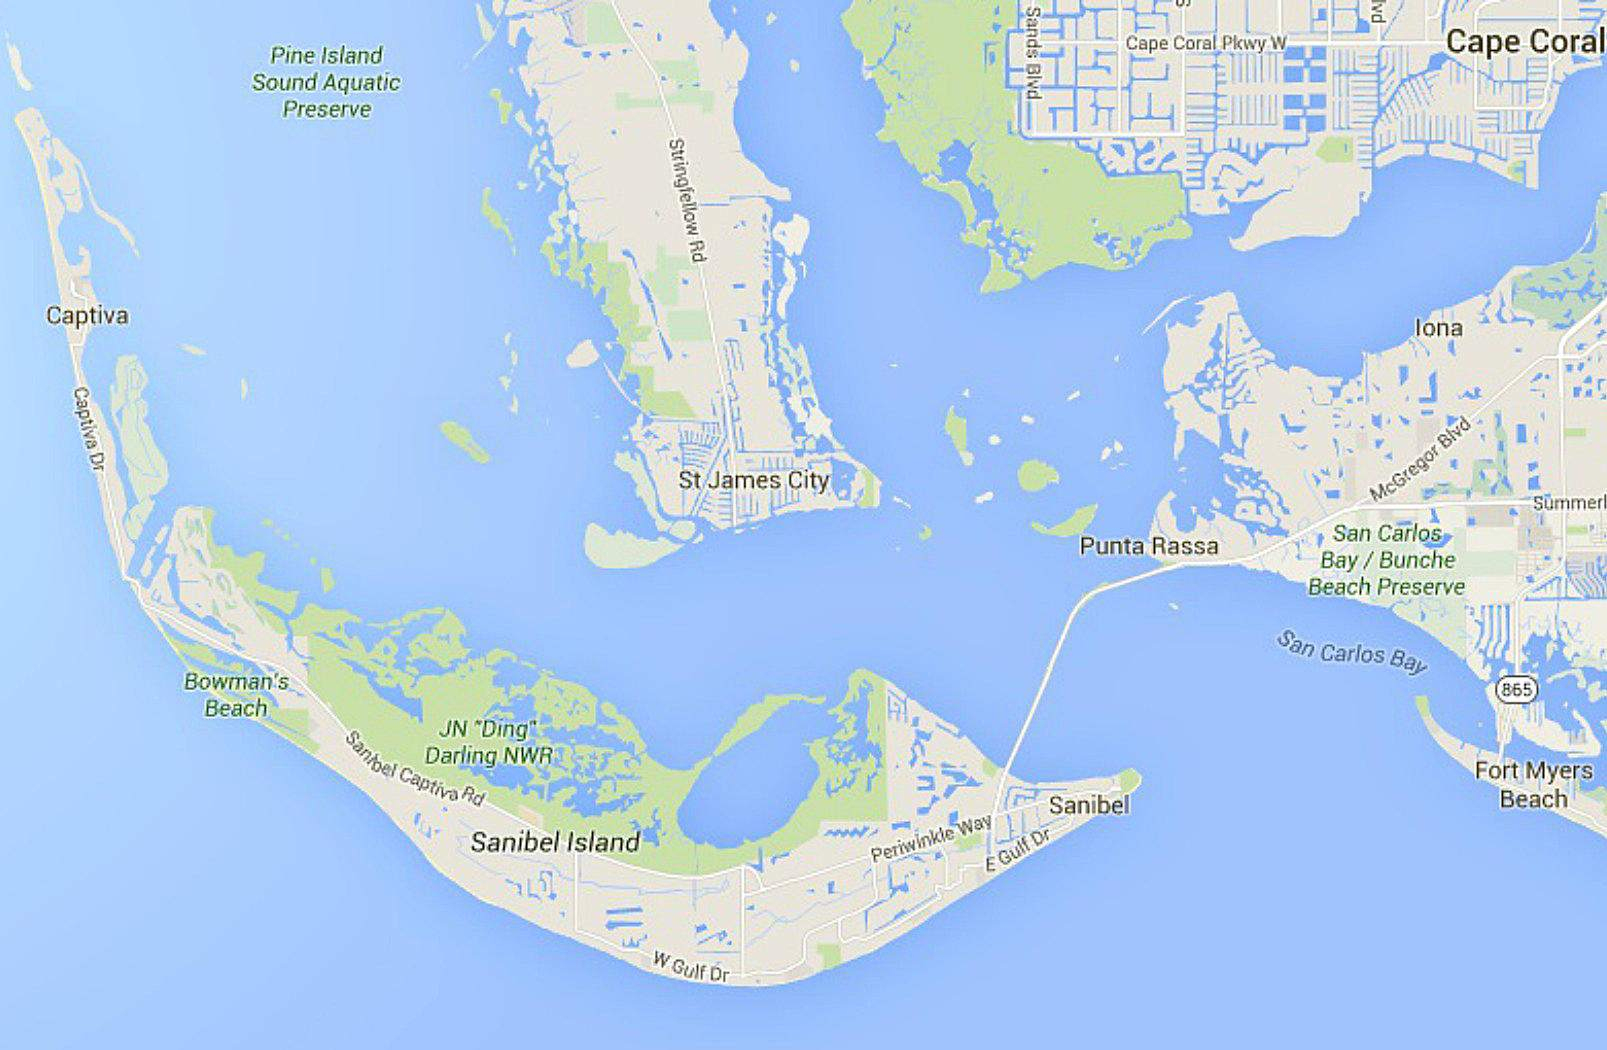 Maps Of Florida: Orlando, Tampa, Miami, Keys, And More - Google Maps Key Largo Florida